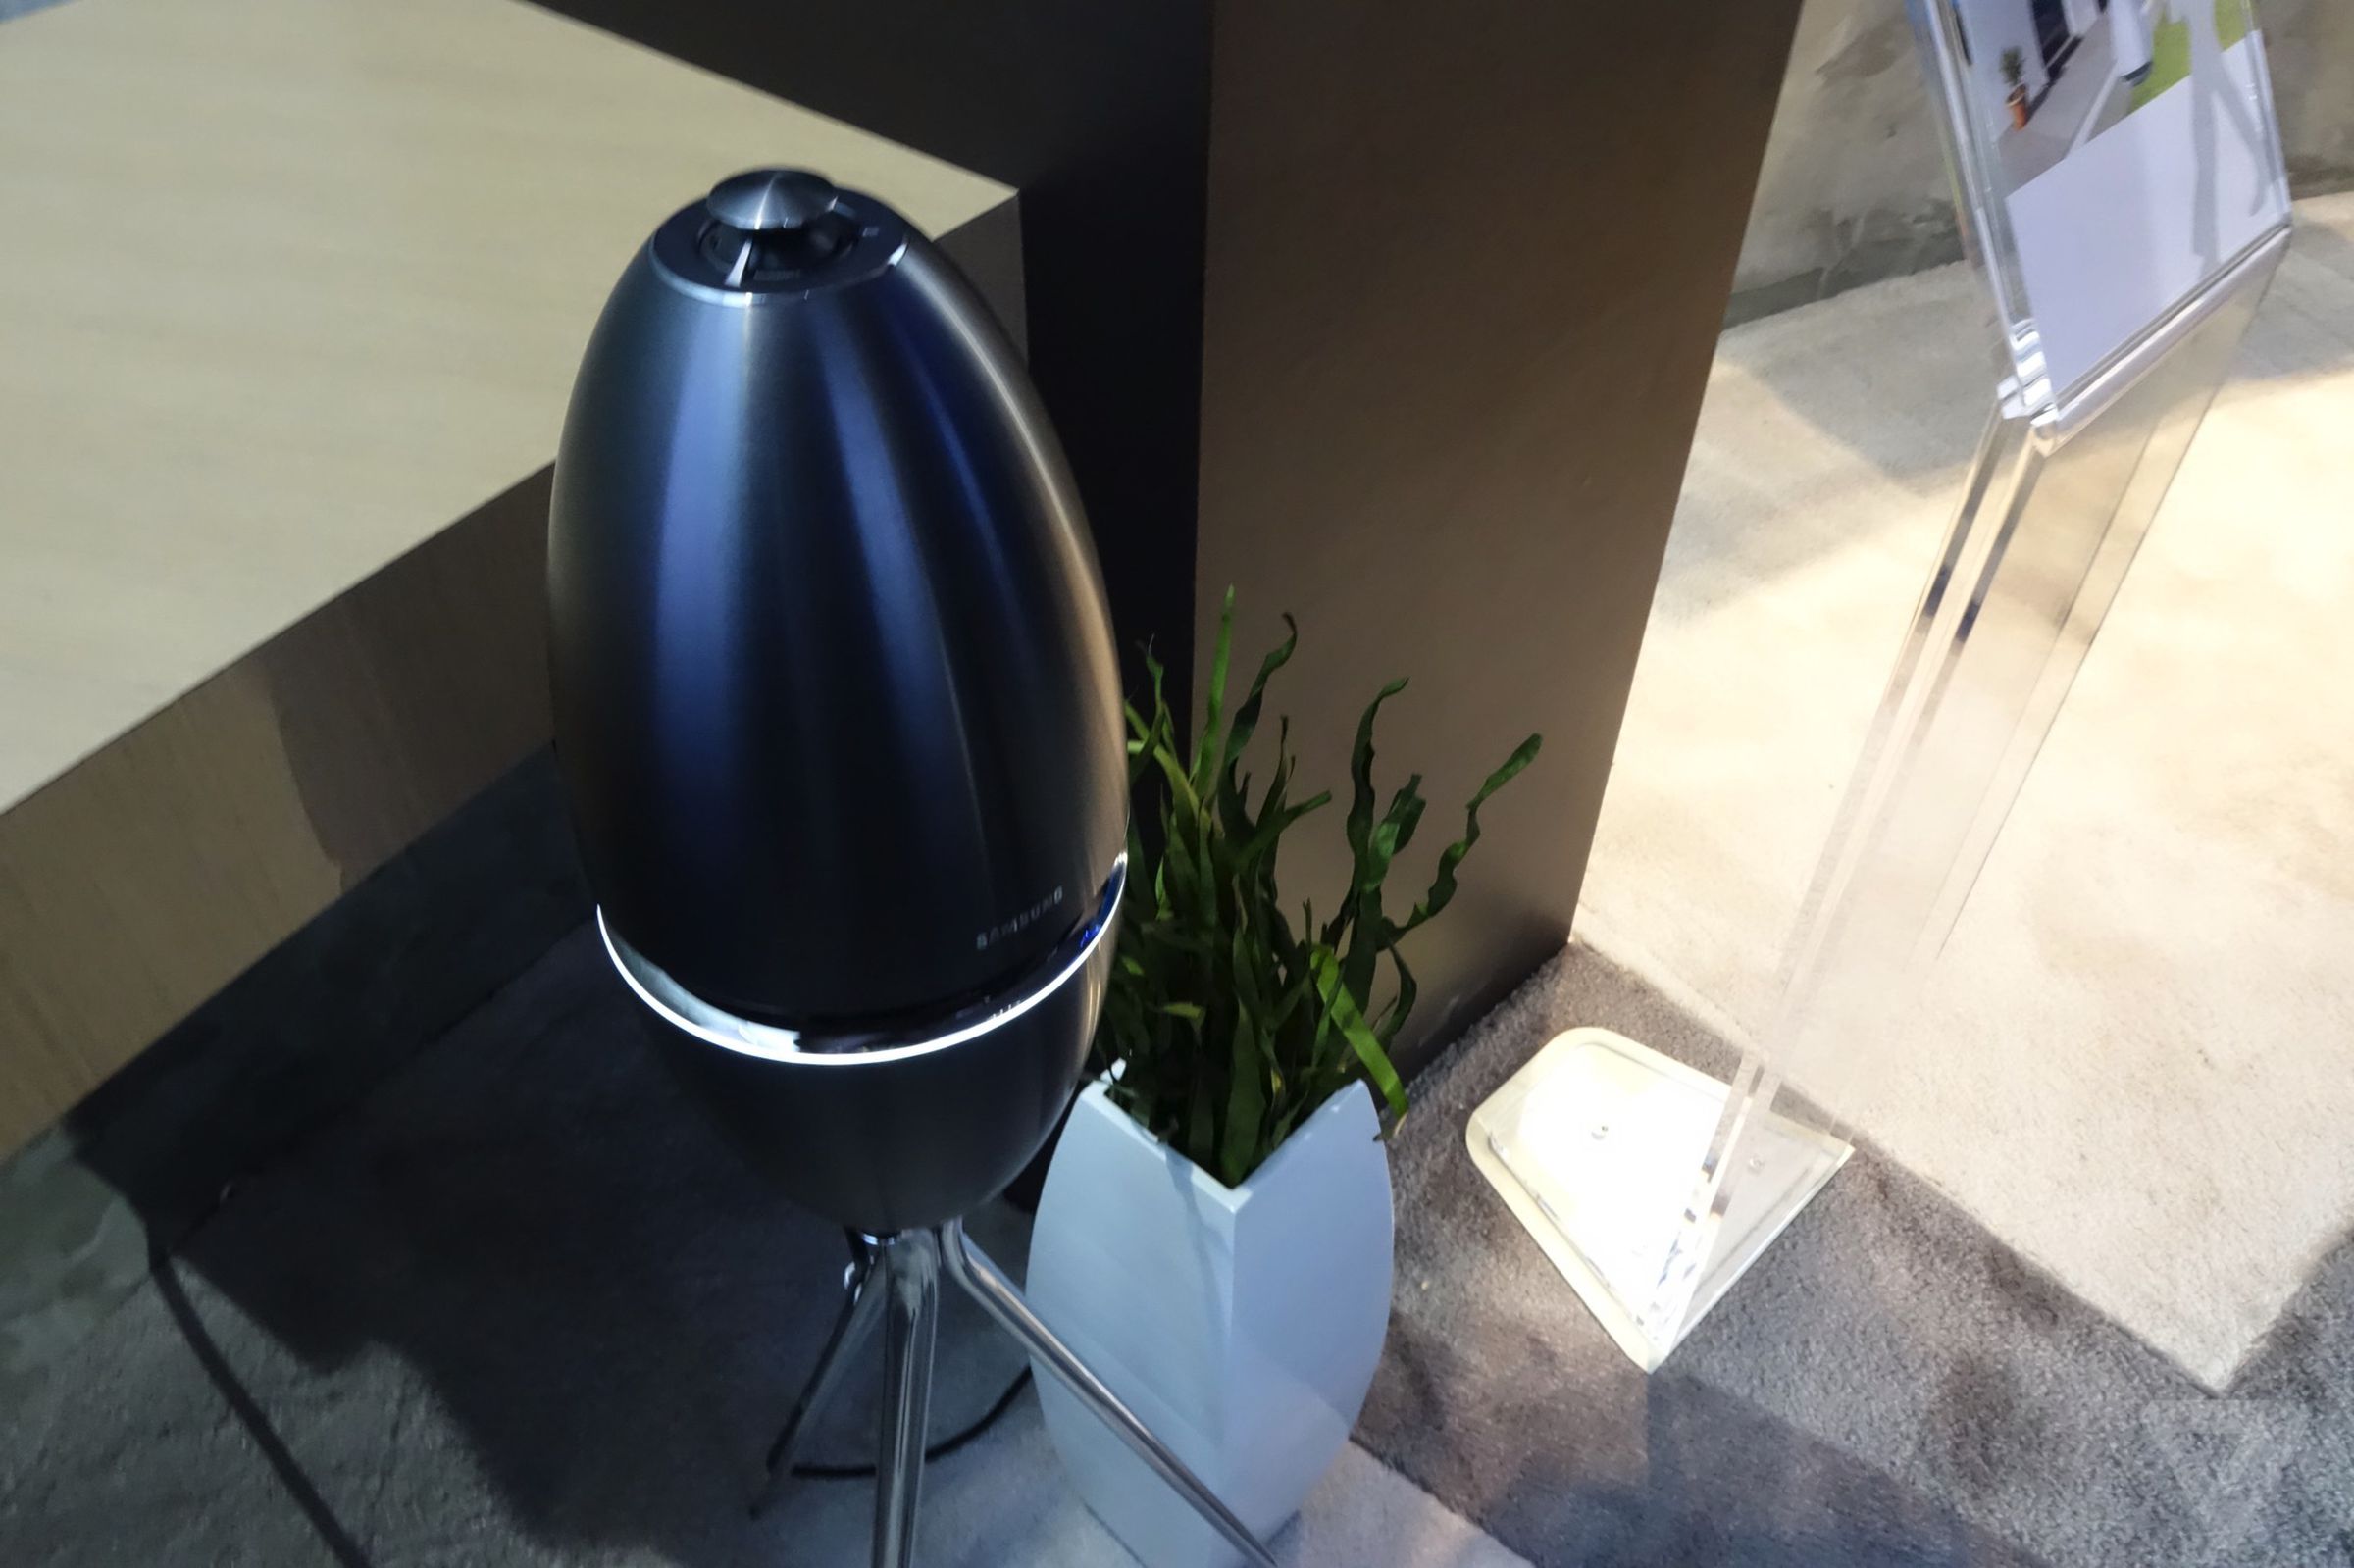 Samsung 360-degree speakers in photos 